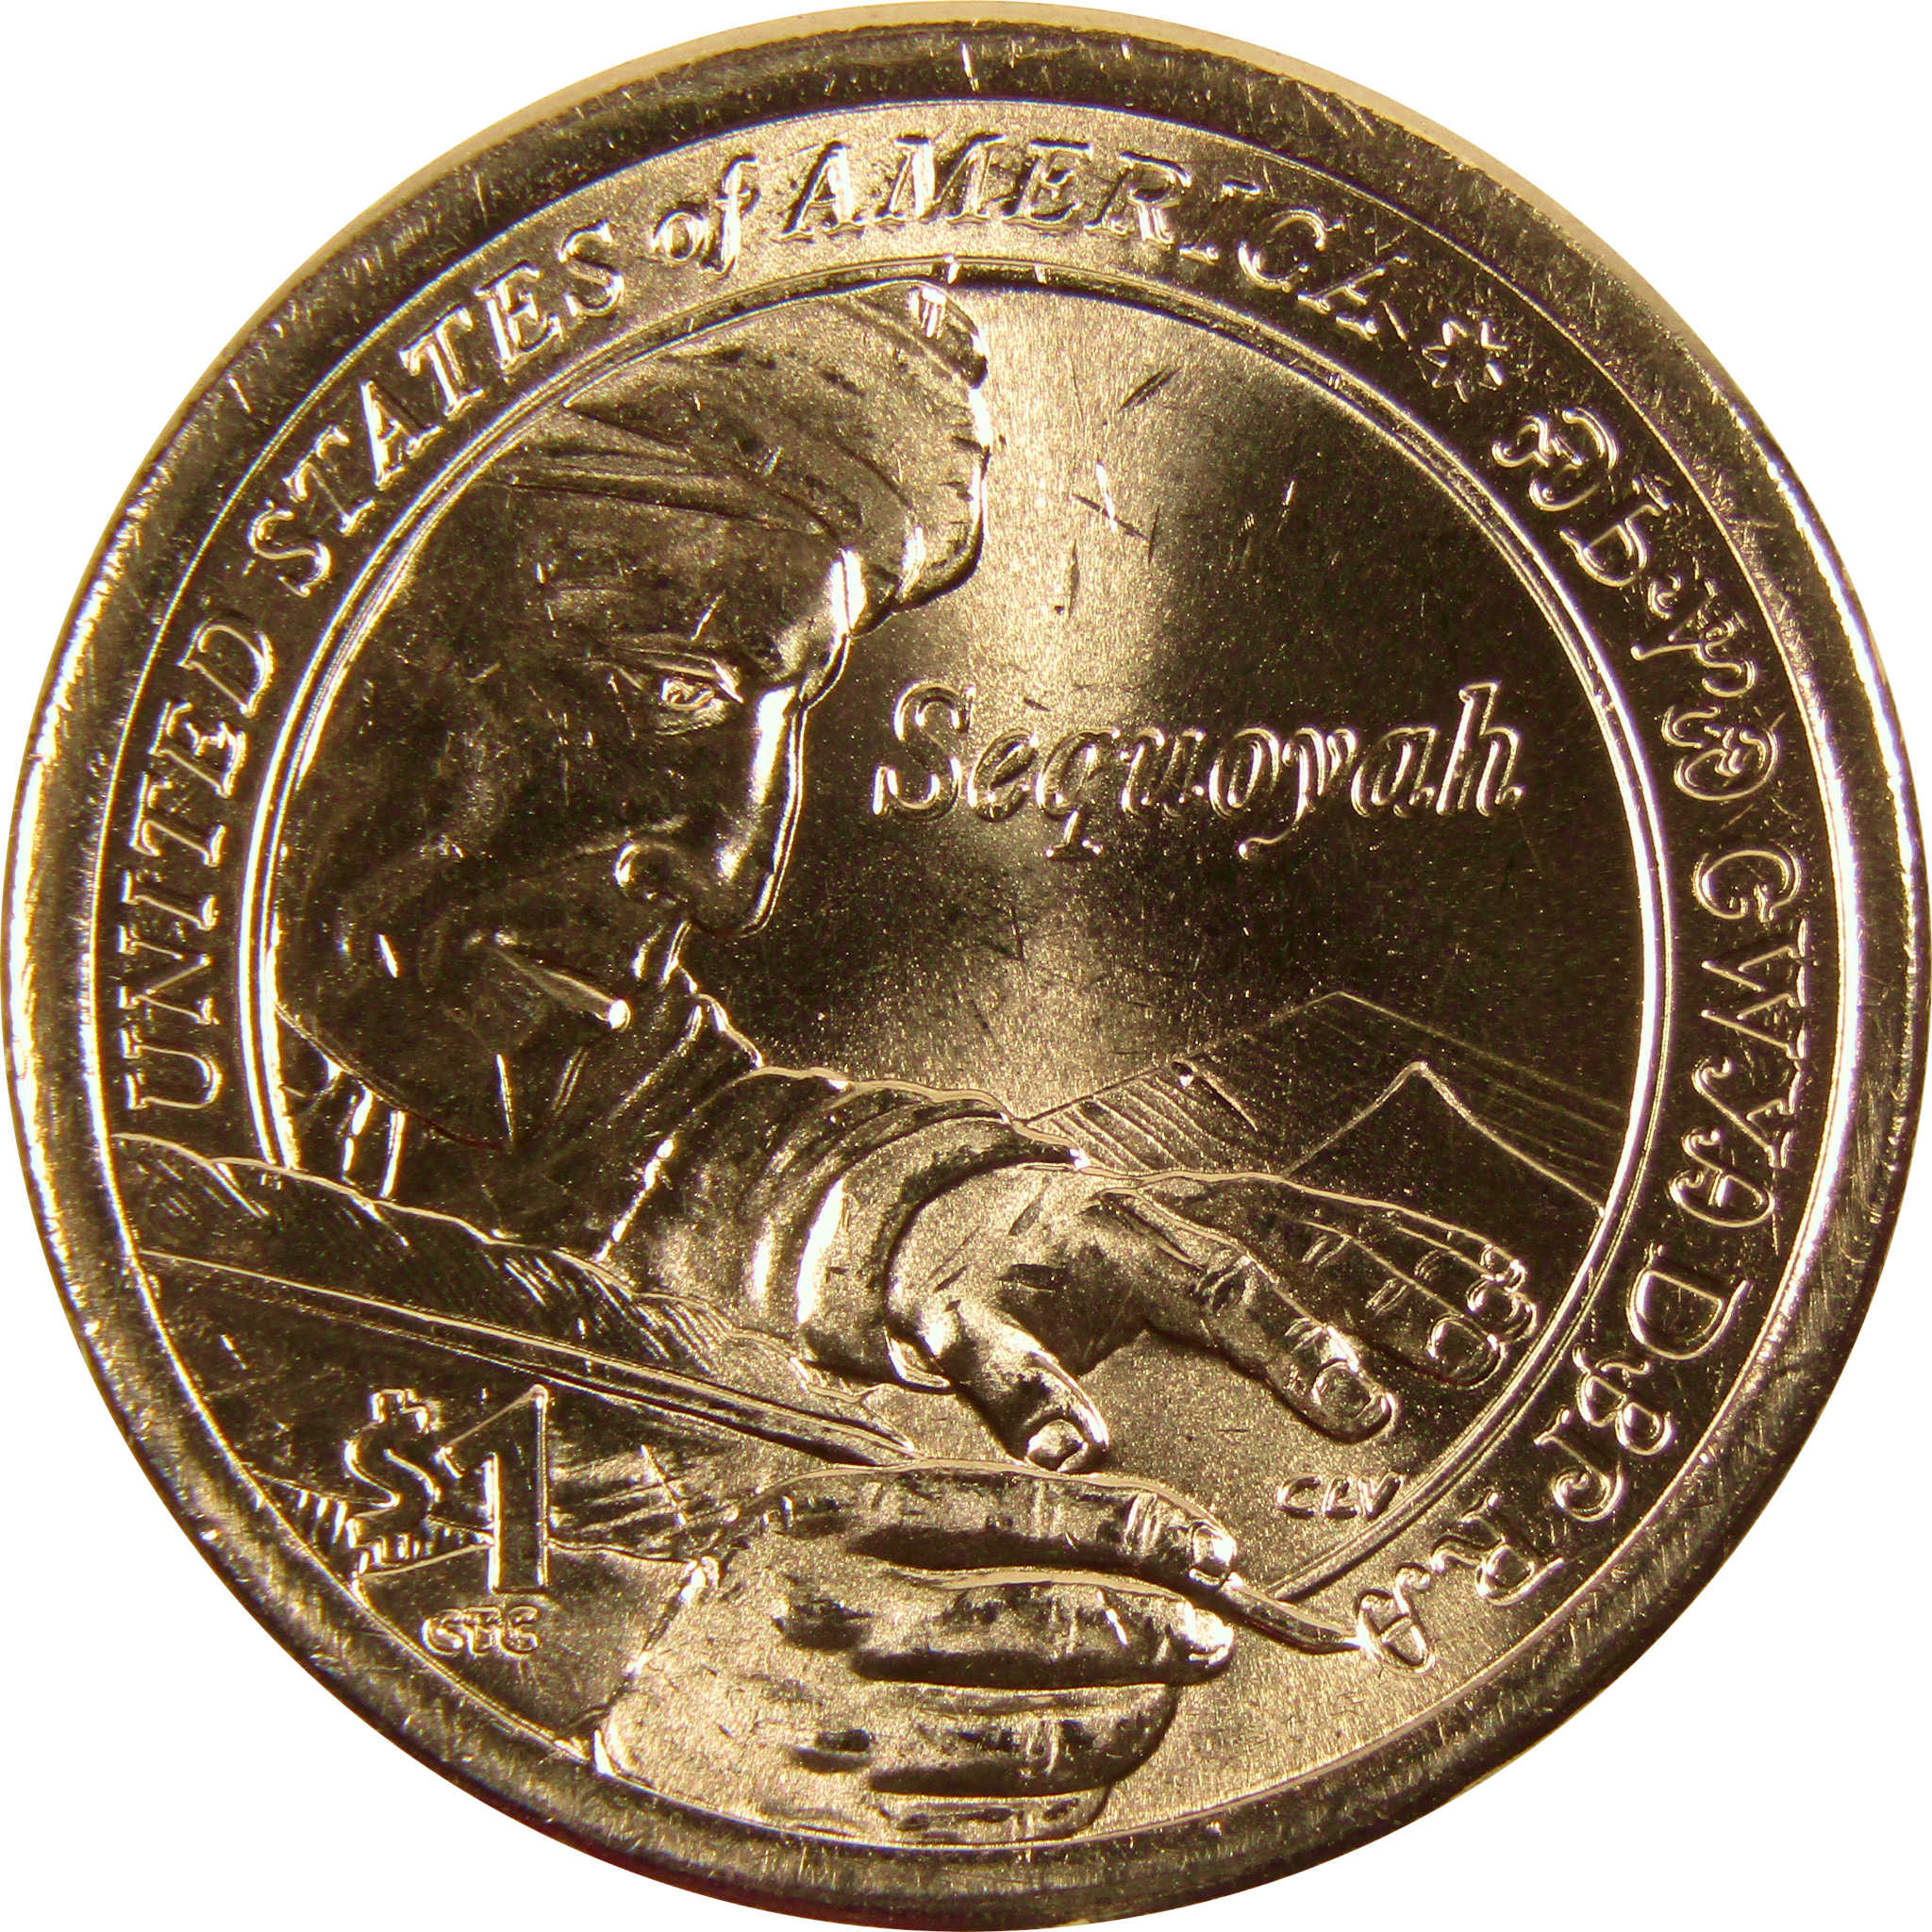 2017 D Sequoyah Native American Dollar BU Uncirculated $1 Coin